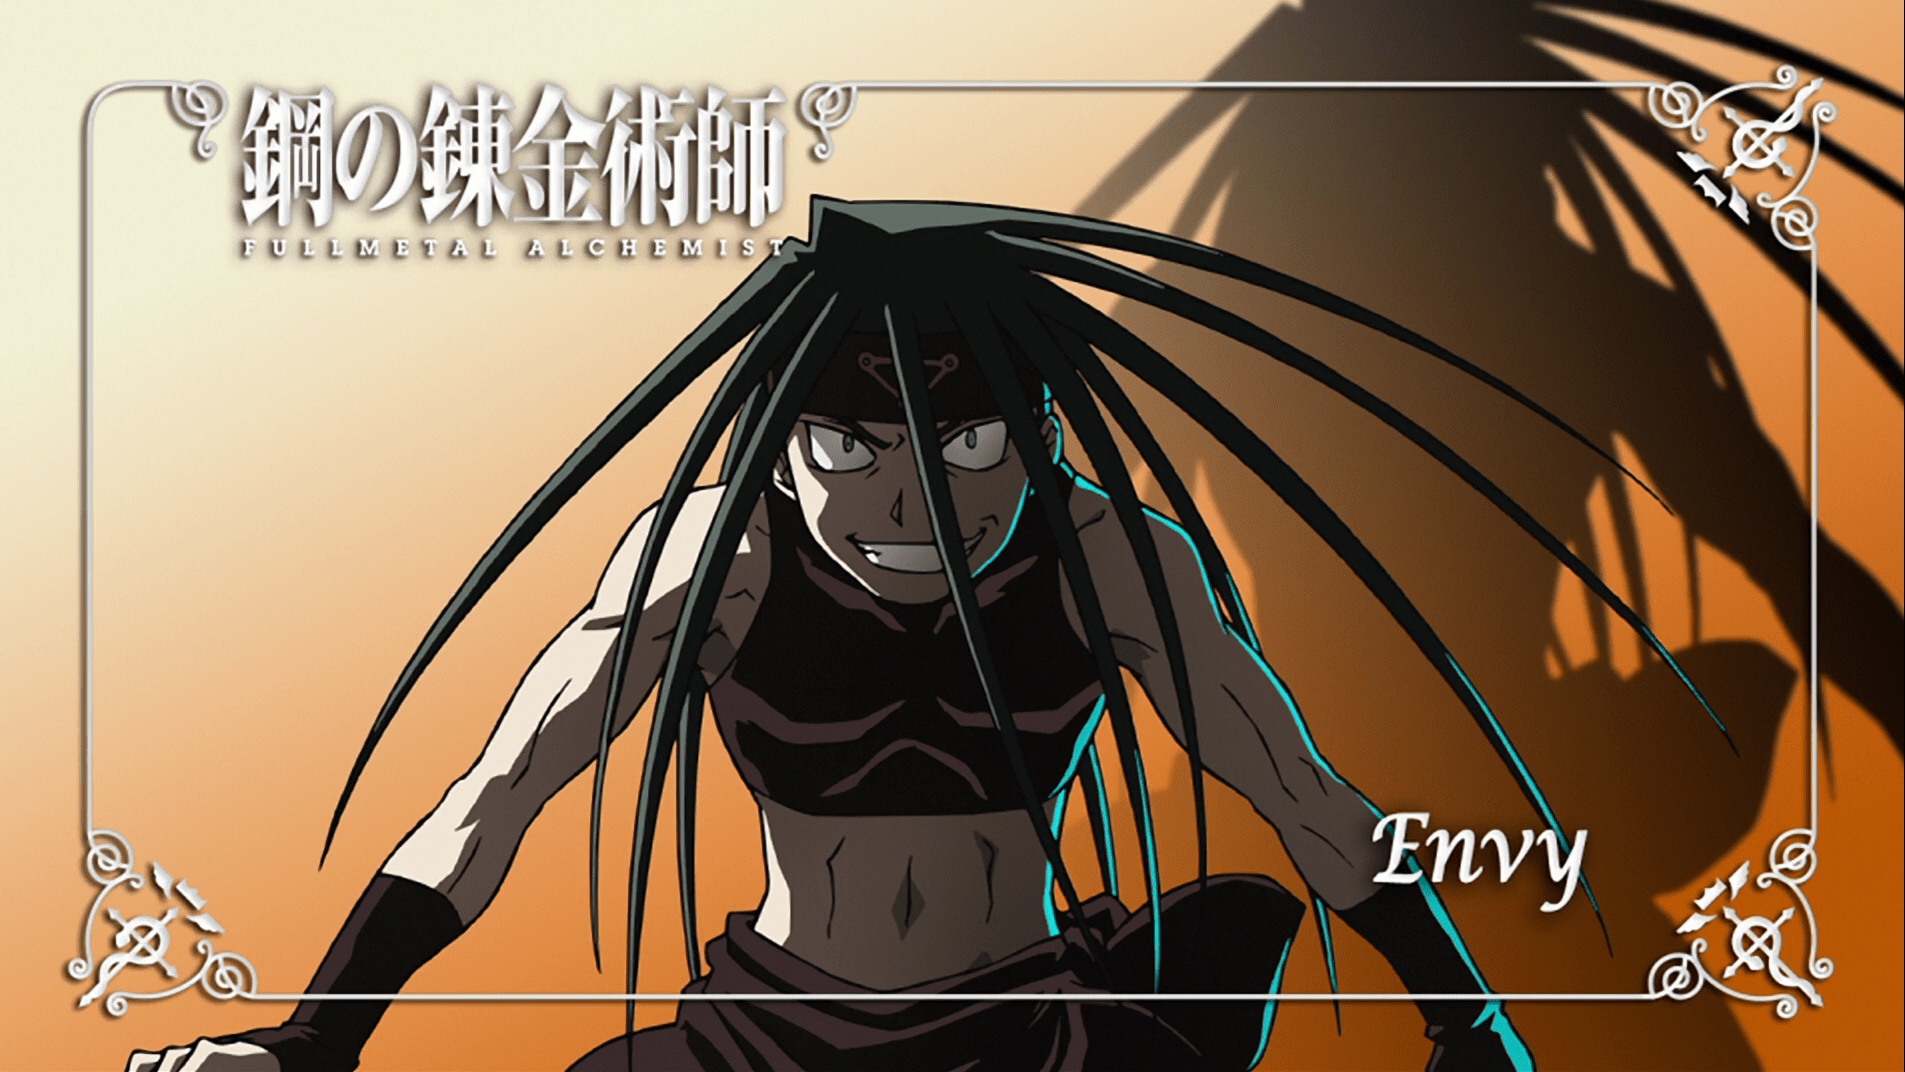 Envy (Fullmetal Alchemist) HD Wallpaper and Background